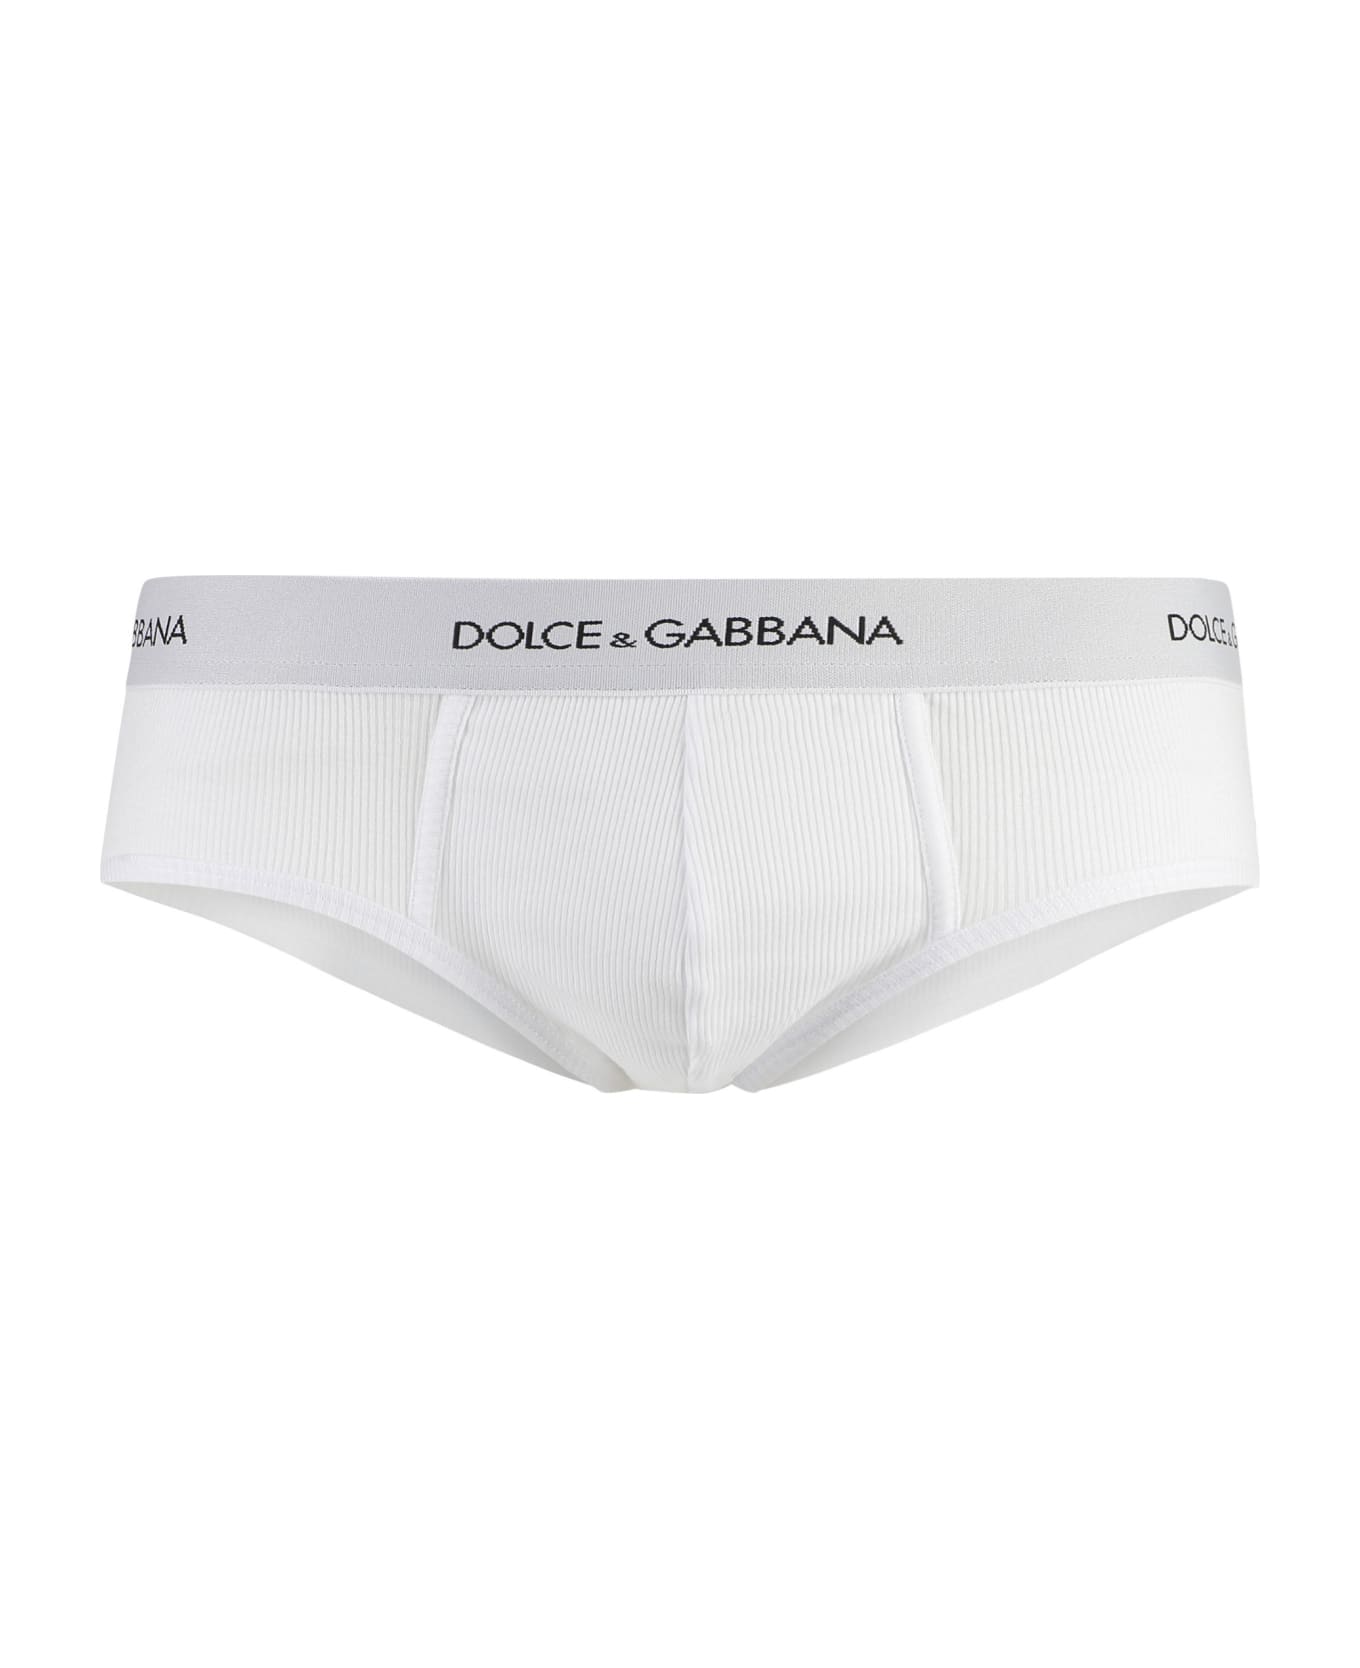 Dolce & Gabbana Plain Color Briefs - BIACO OTTICO